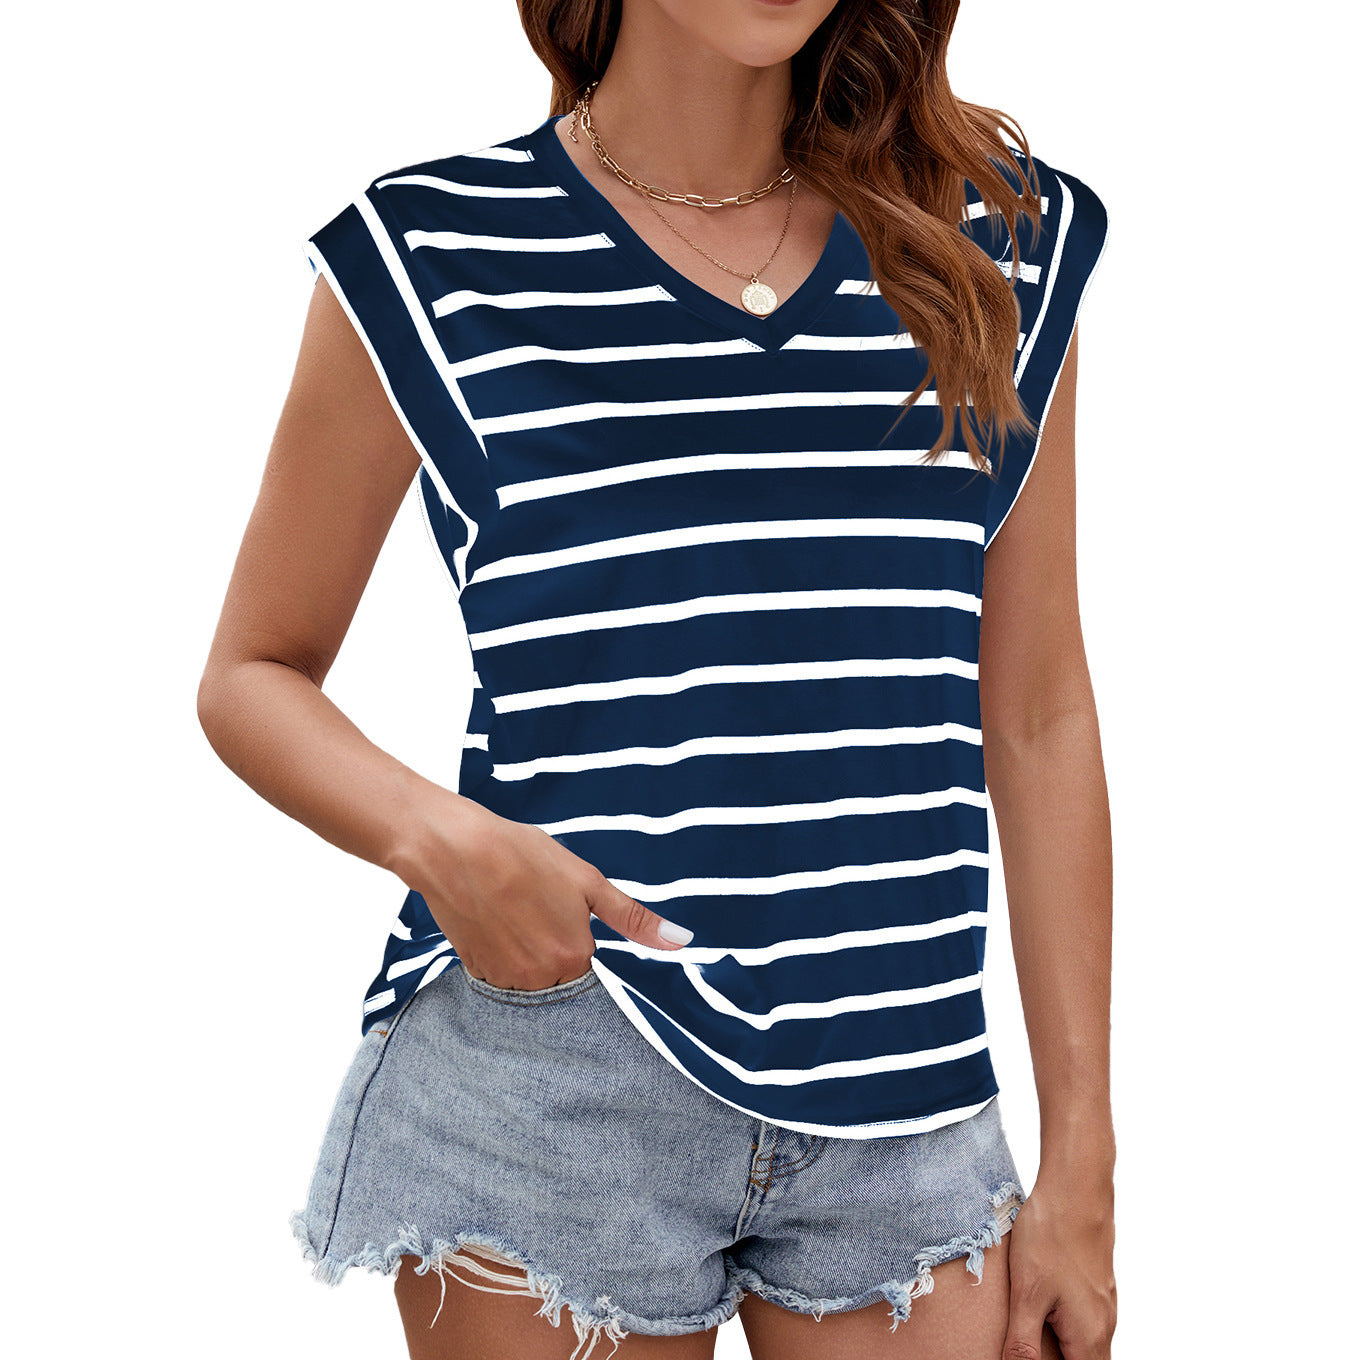 Fashion Stripe Print V-neck Short-sleeved T-Shirt Summer Loose Tank Top Womens Clothing